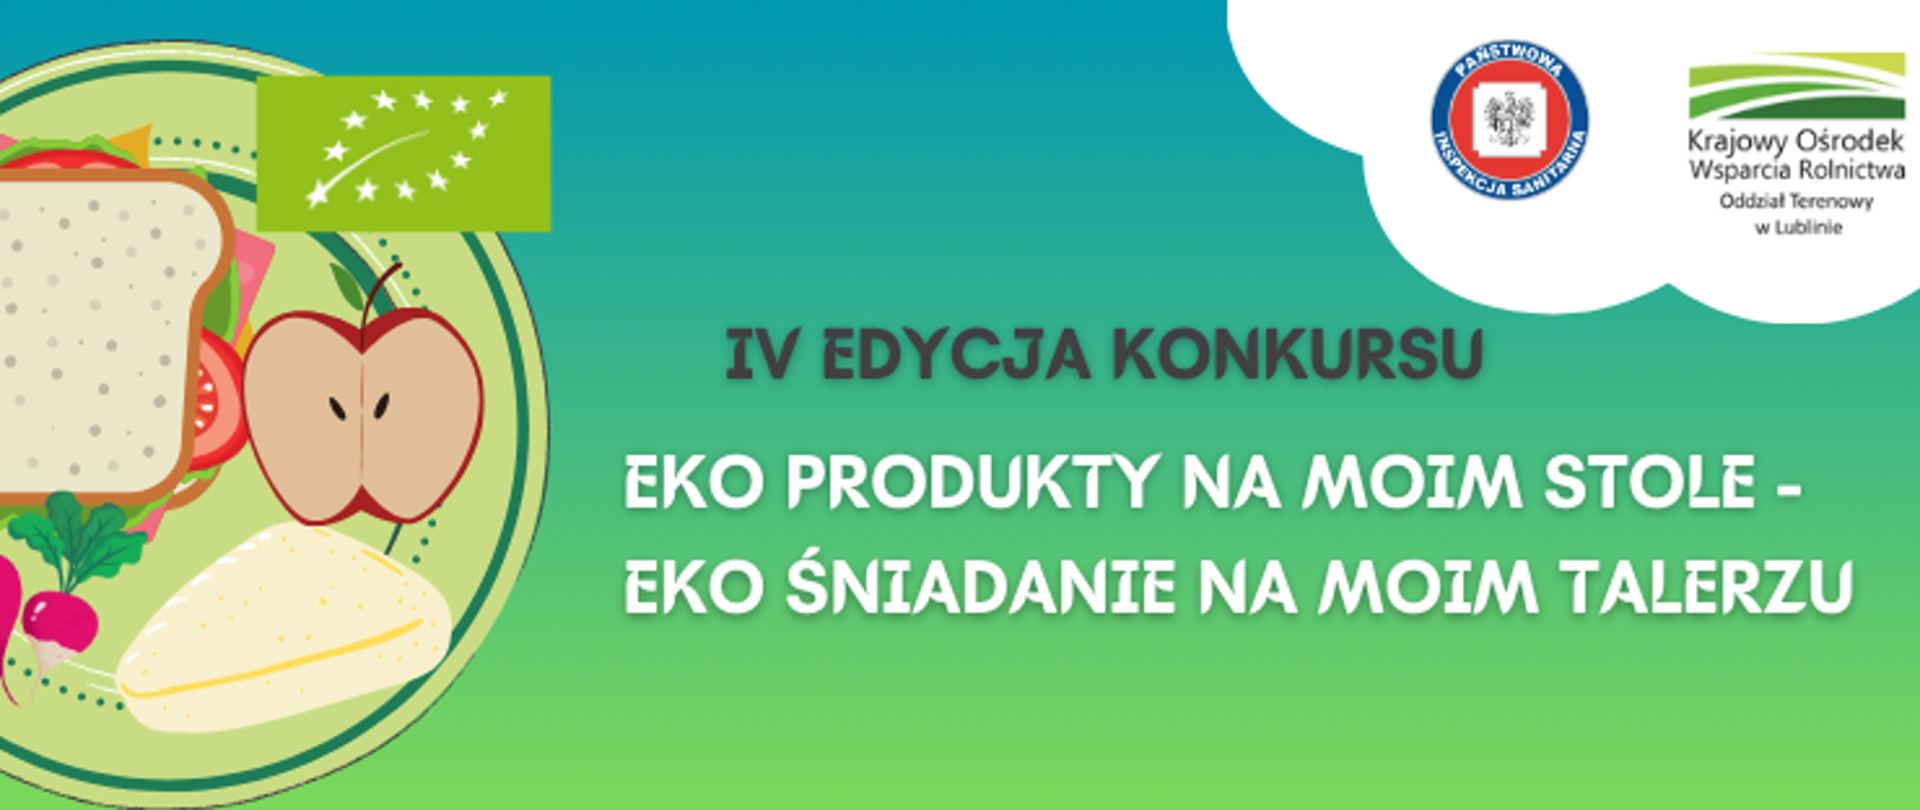 Eko_produkty_24